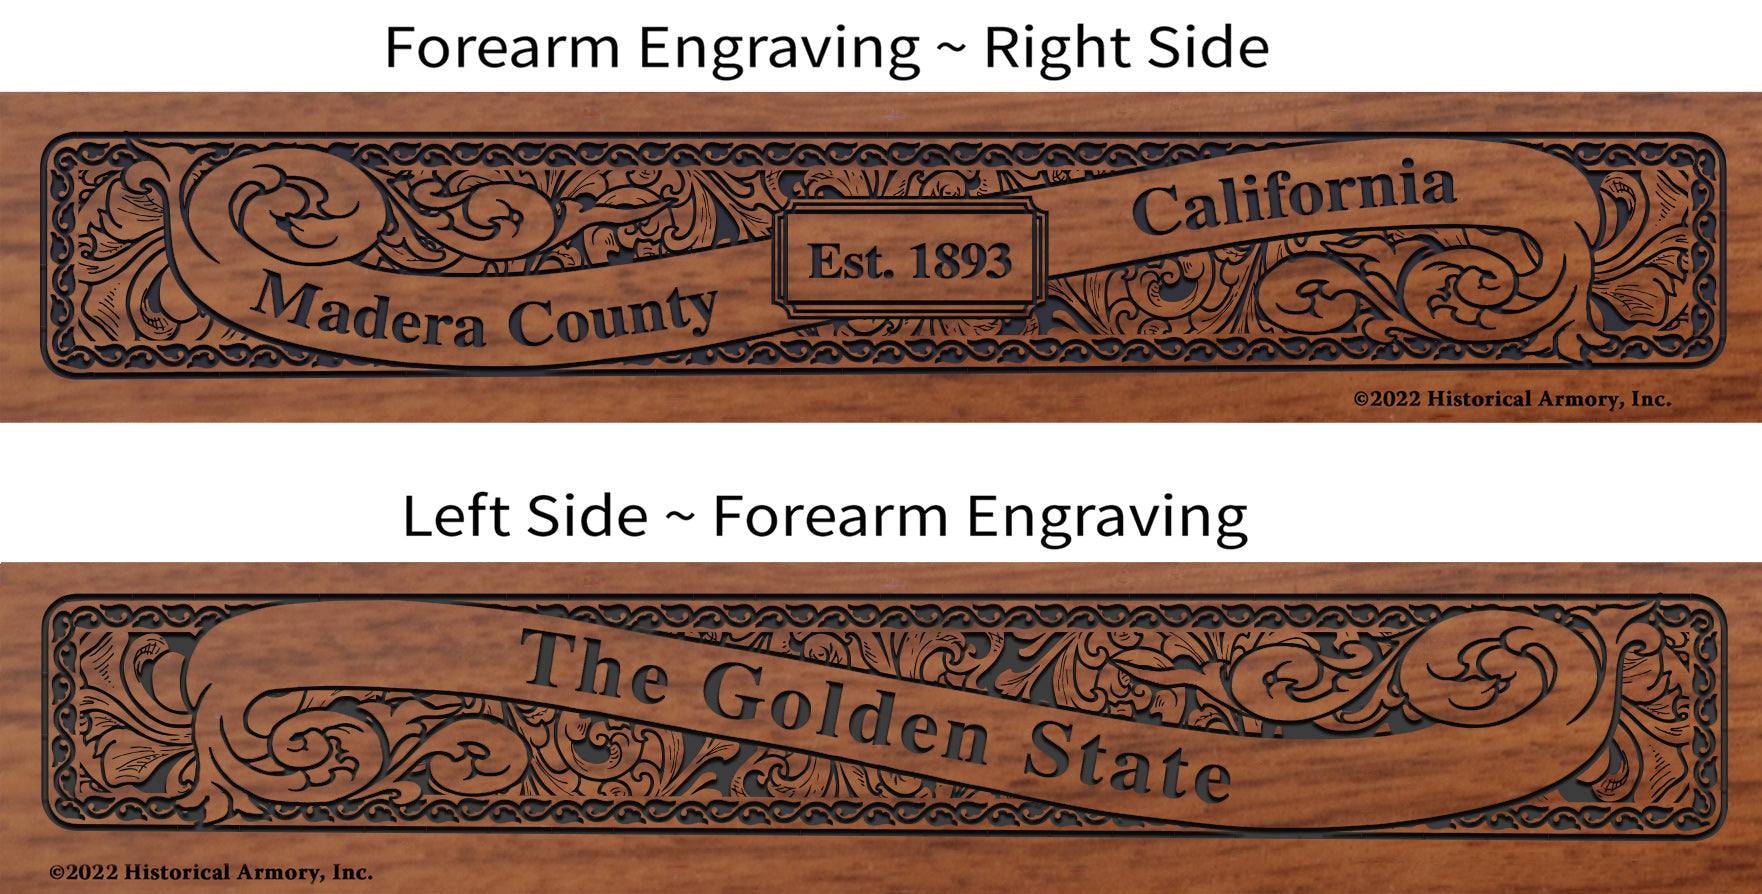 Madera County California Engraved Rifle Forearm